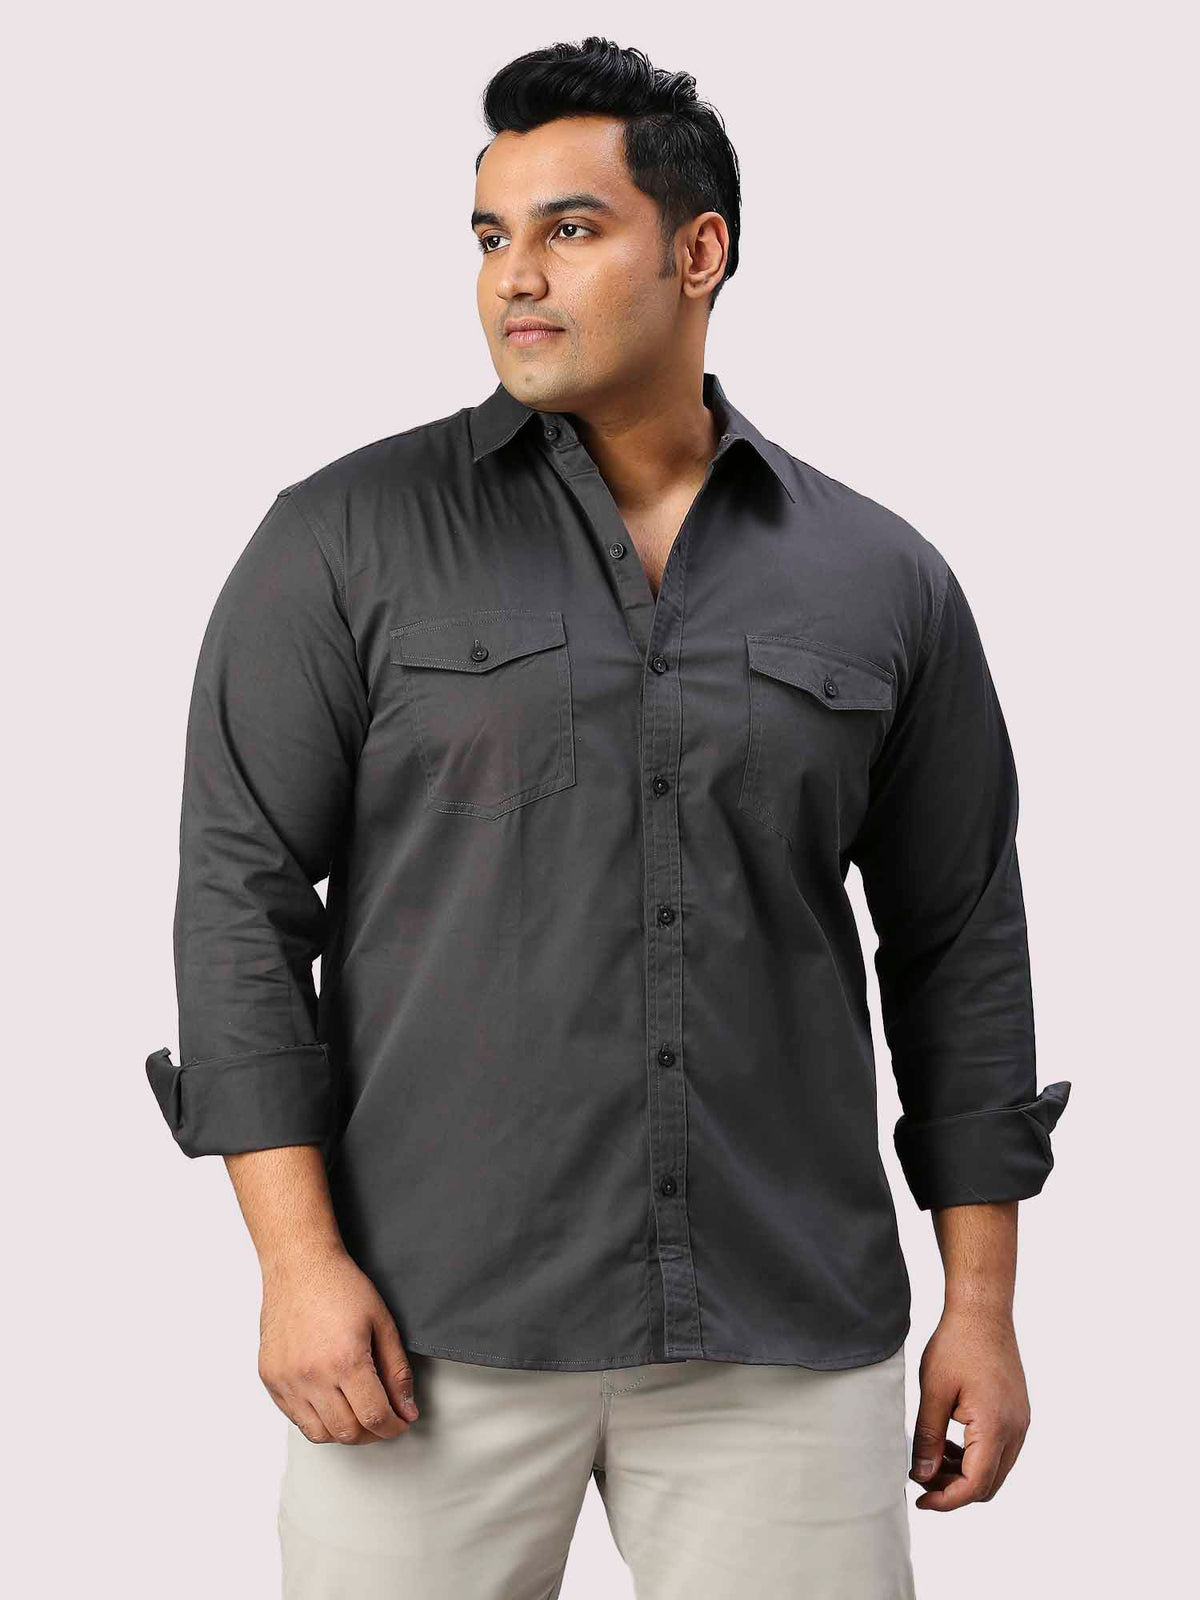 Black Solid Pure Cotton Double Pocket Full Sleeve Shirt Men's Plus Size